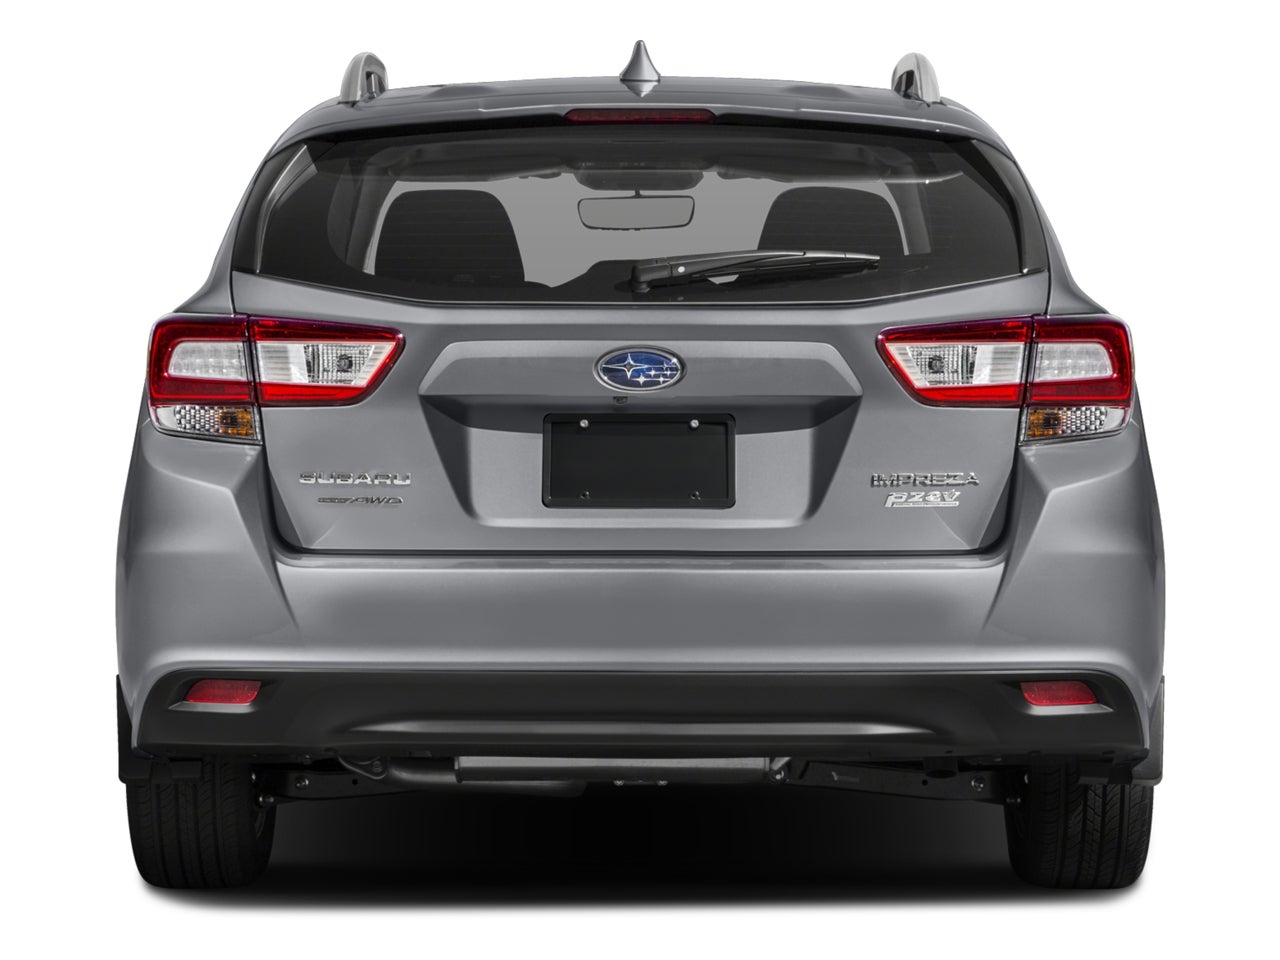 2018 Subaru Impreza Premium